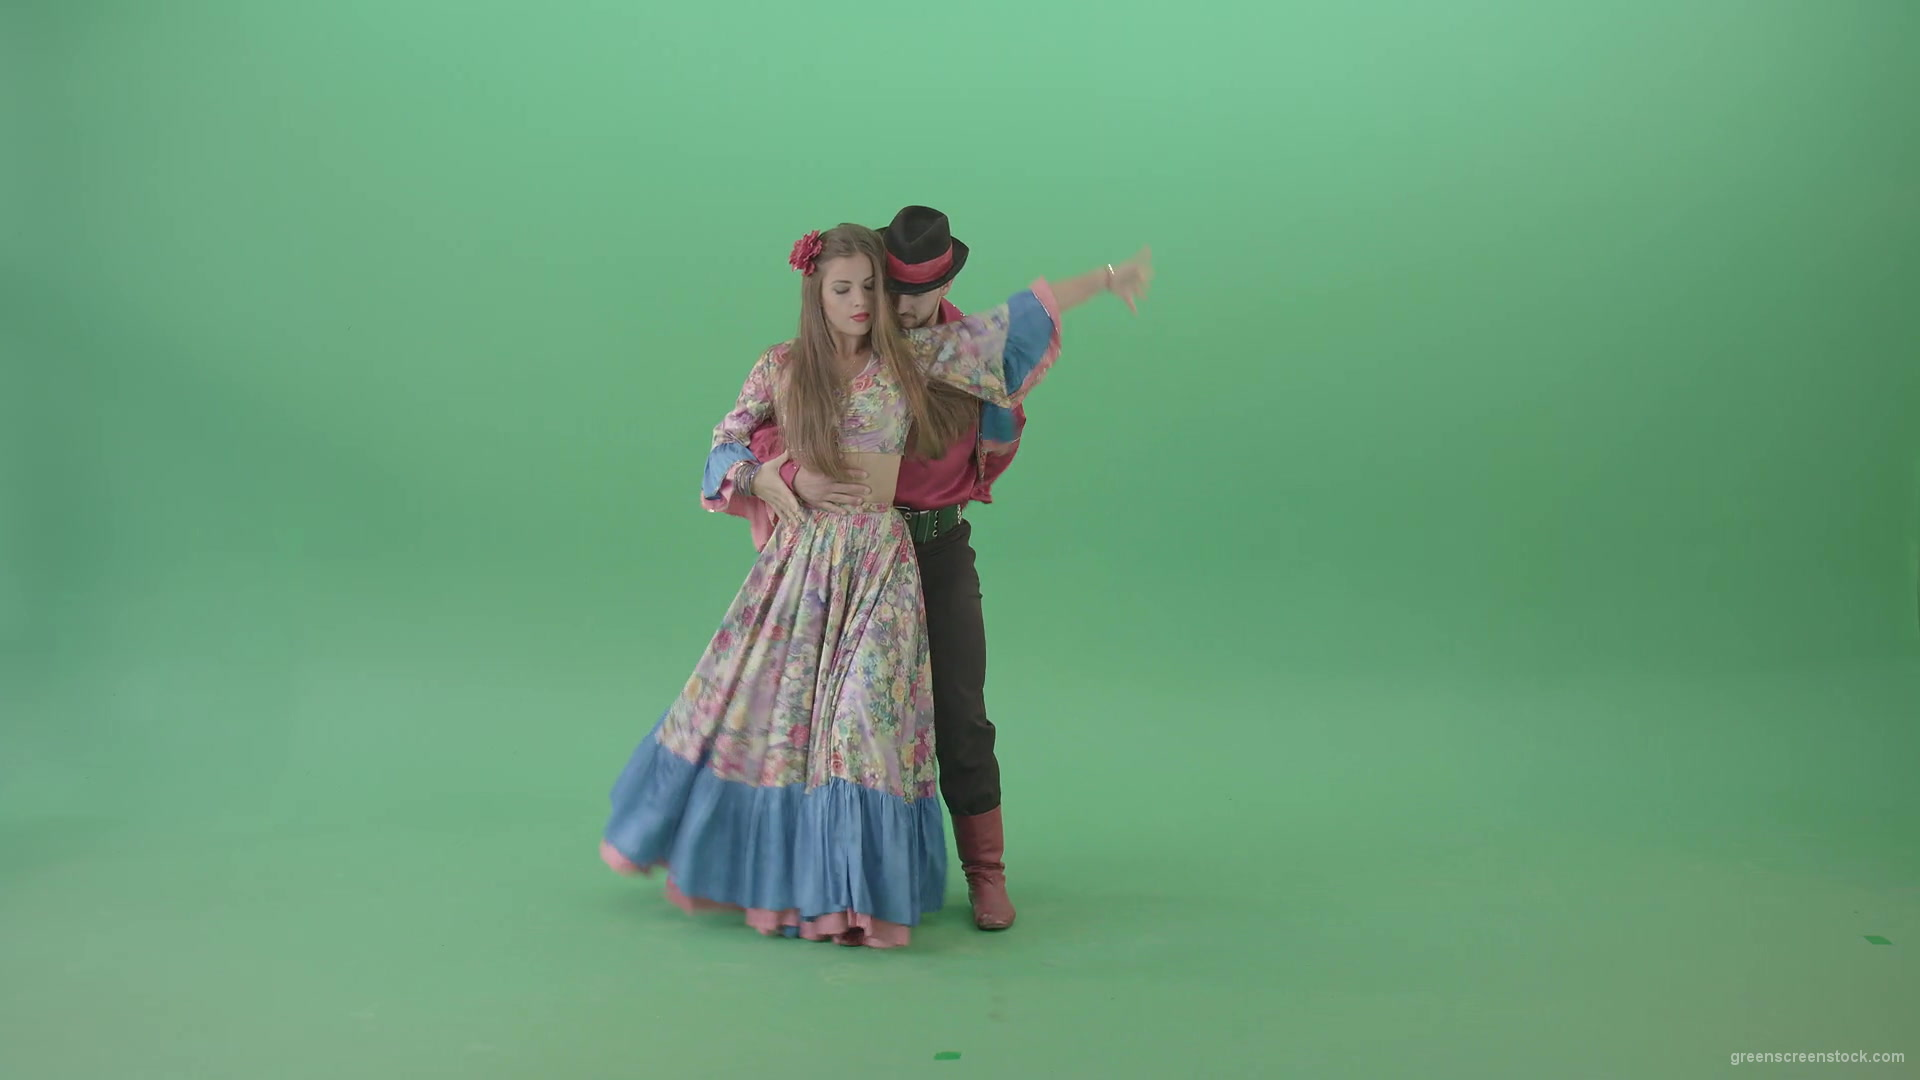 Love-Story-dance-by-gypsian-folk-people-in-balkan-dress-isolated-on-green-screen-4K-video-footage-1920_007 Green Screen Stock